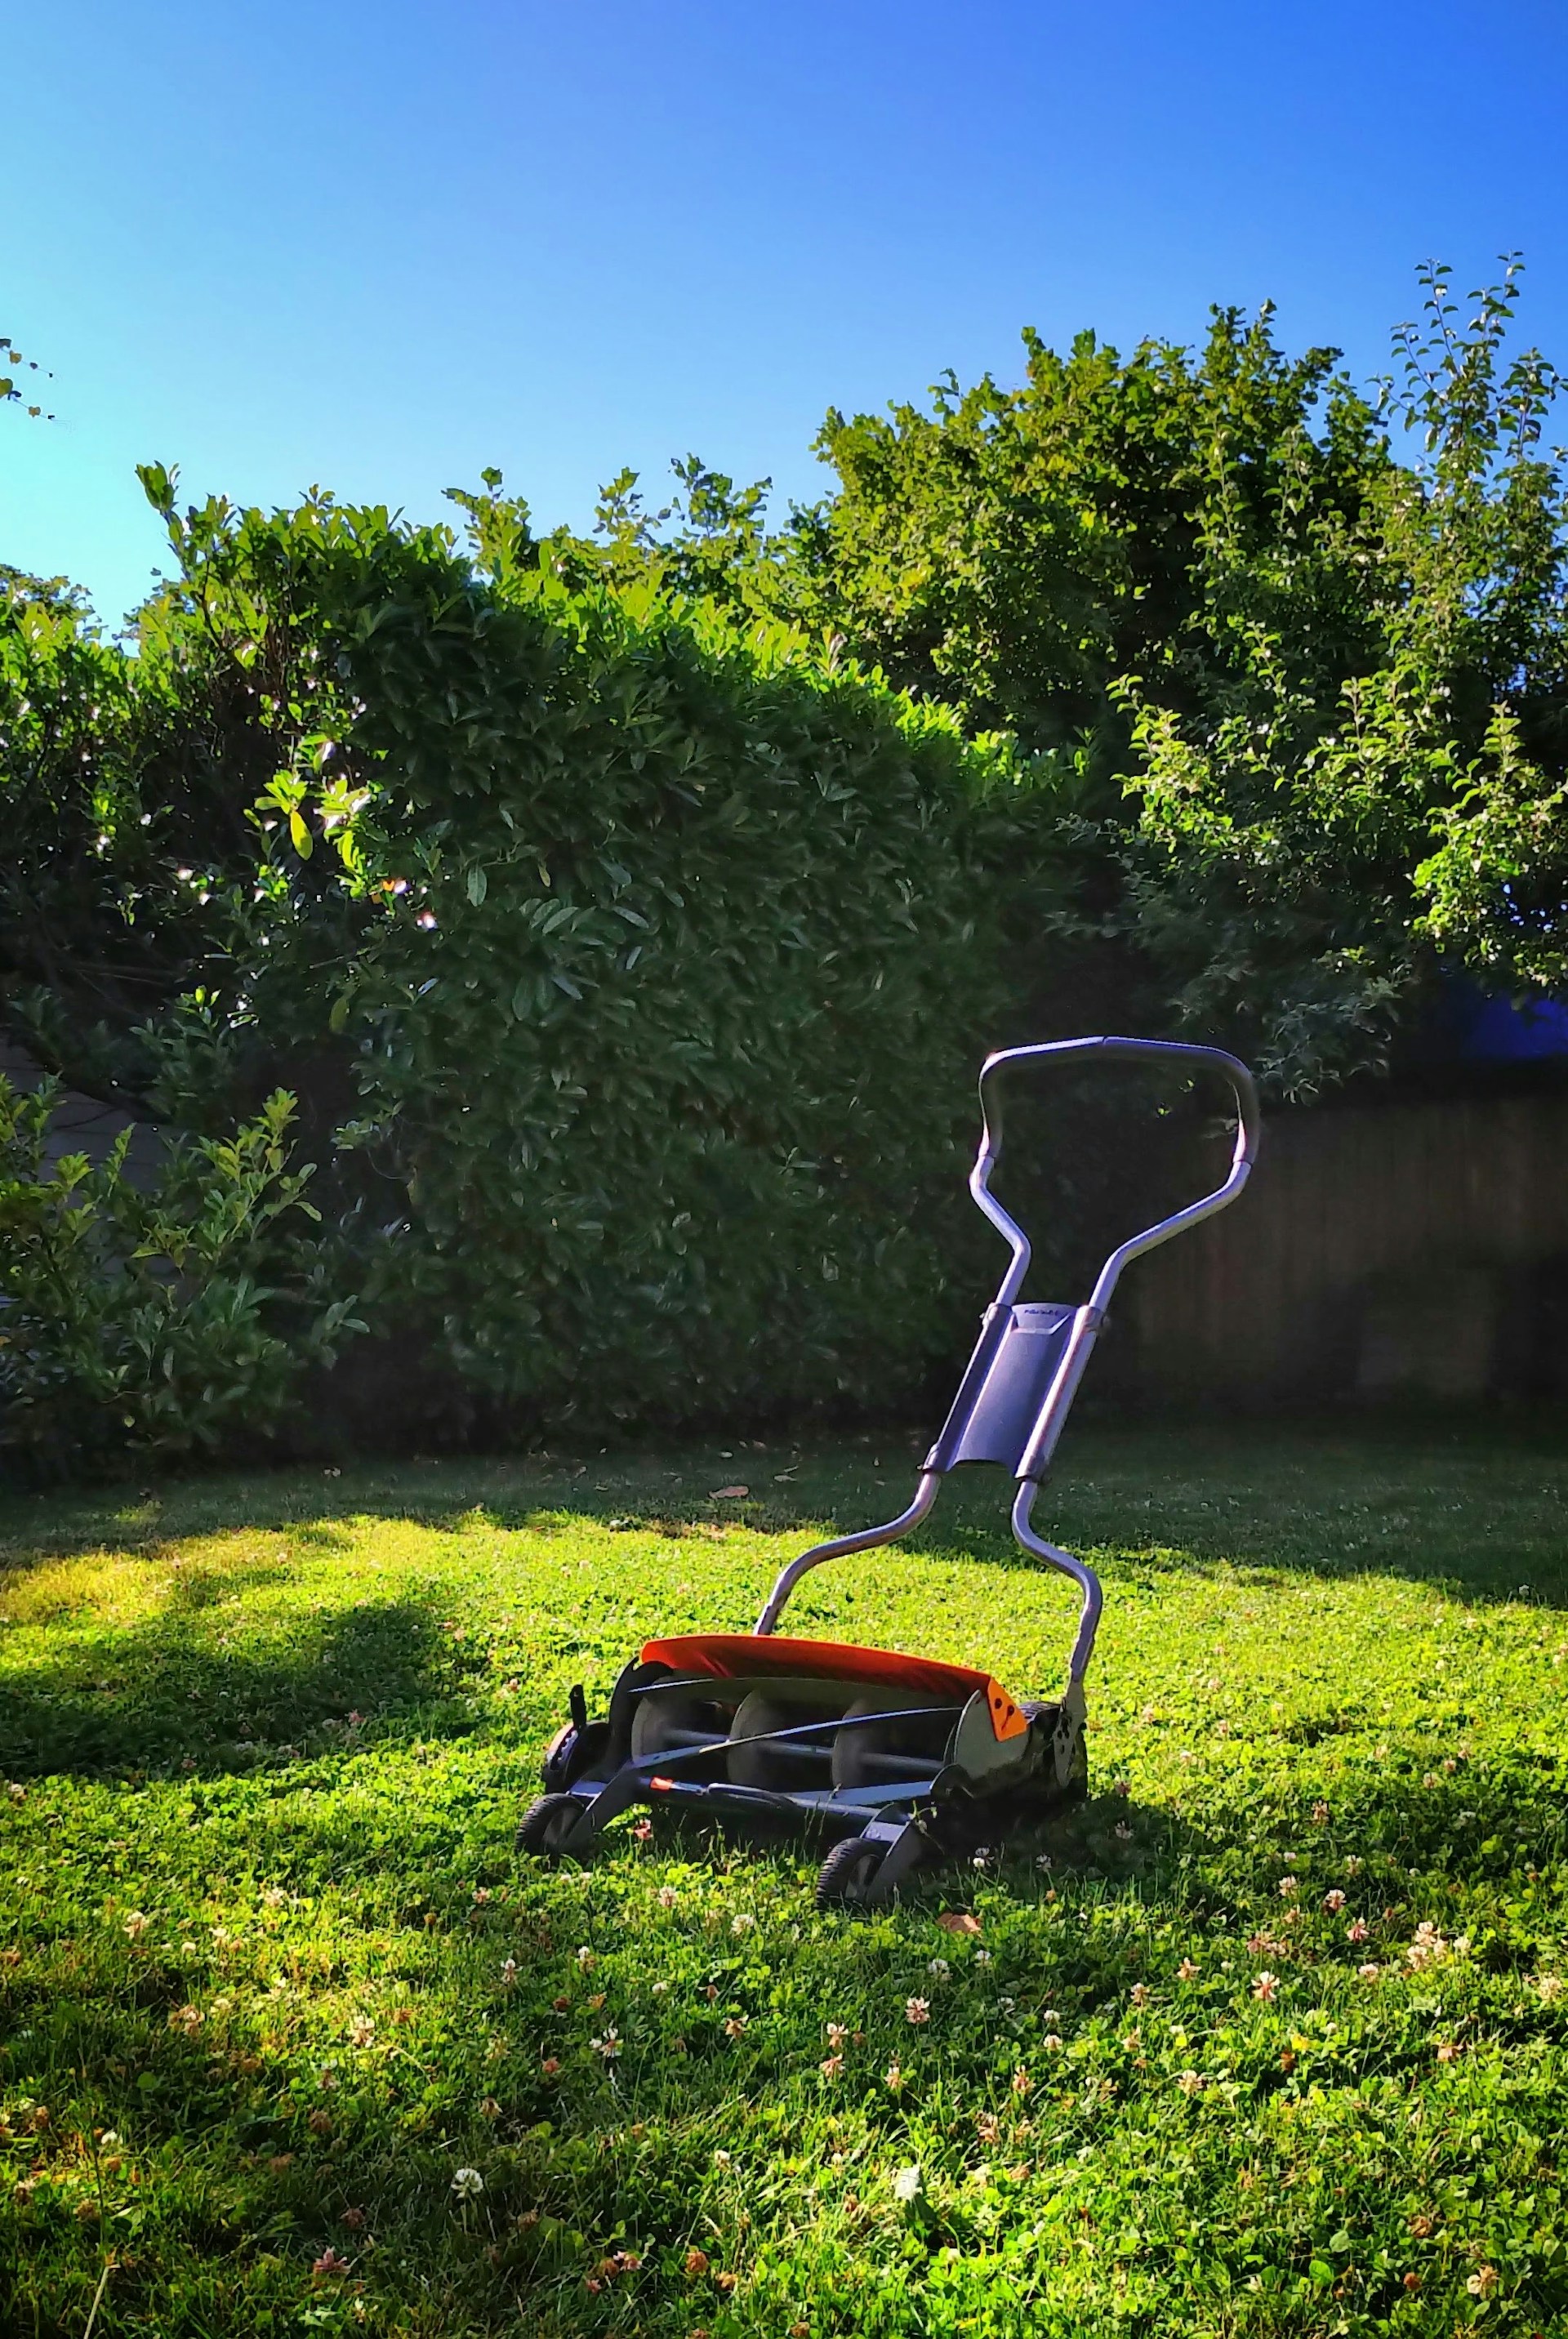 A lawn mower outside | Source: Unsplash